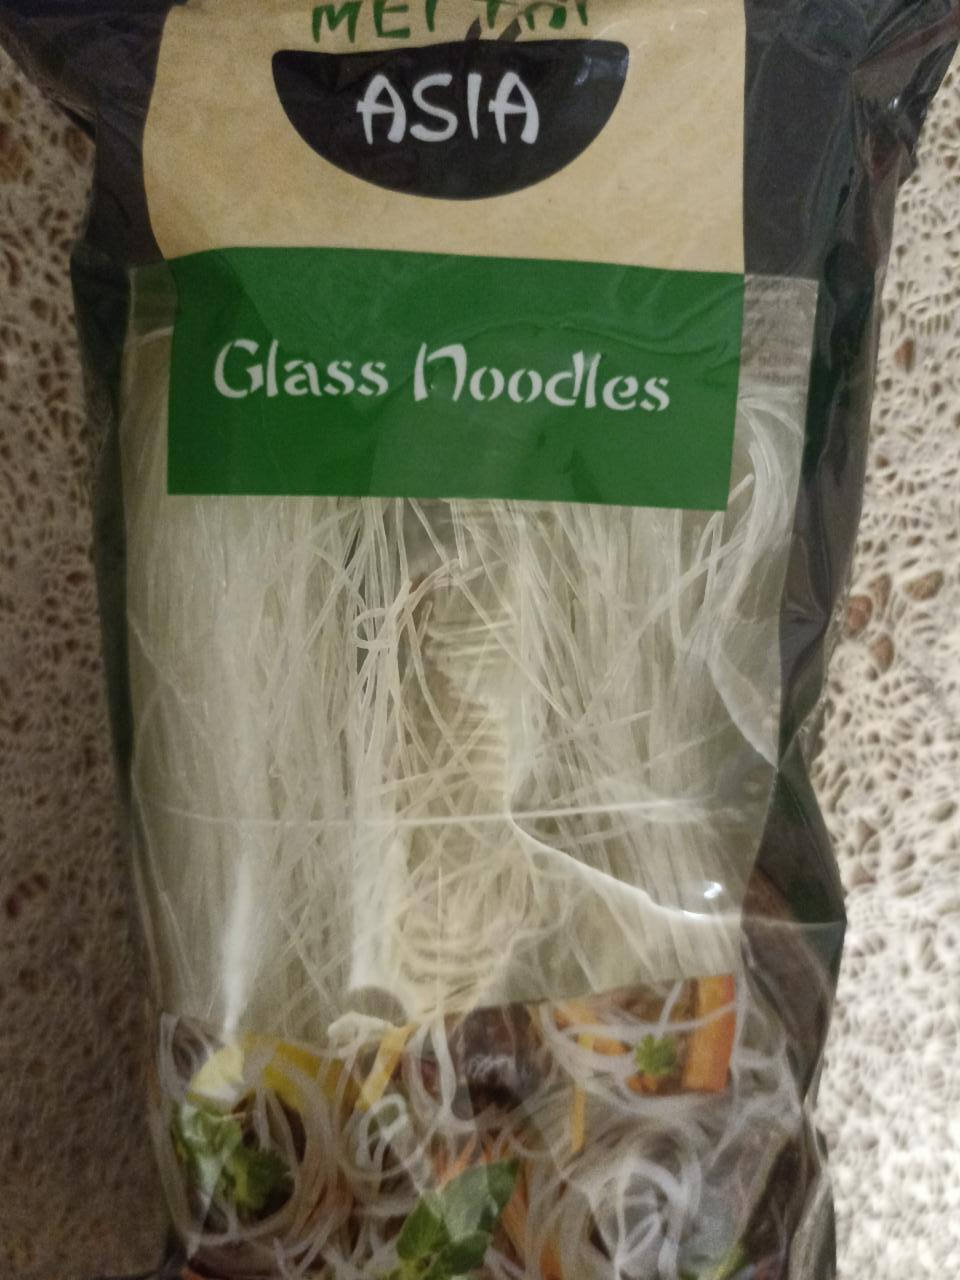 Fotografie - Glass Noodles Mei Tai Asia